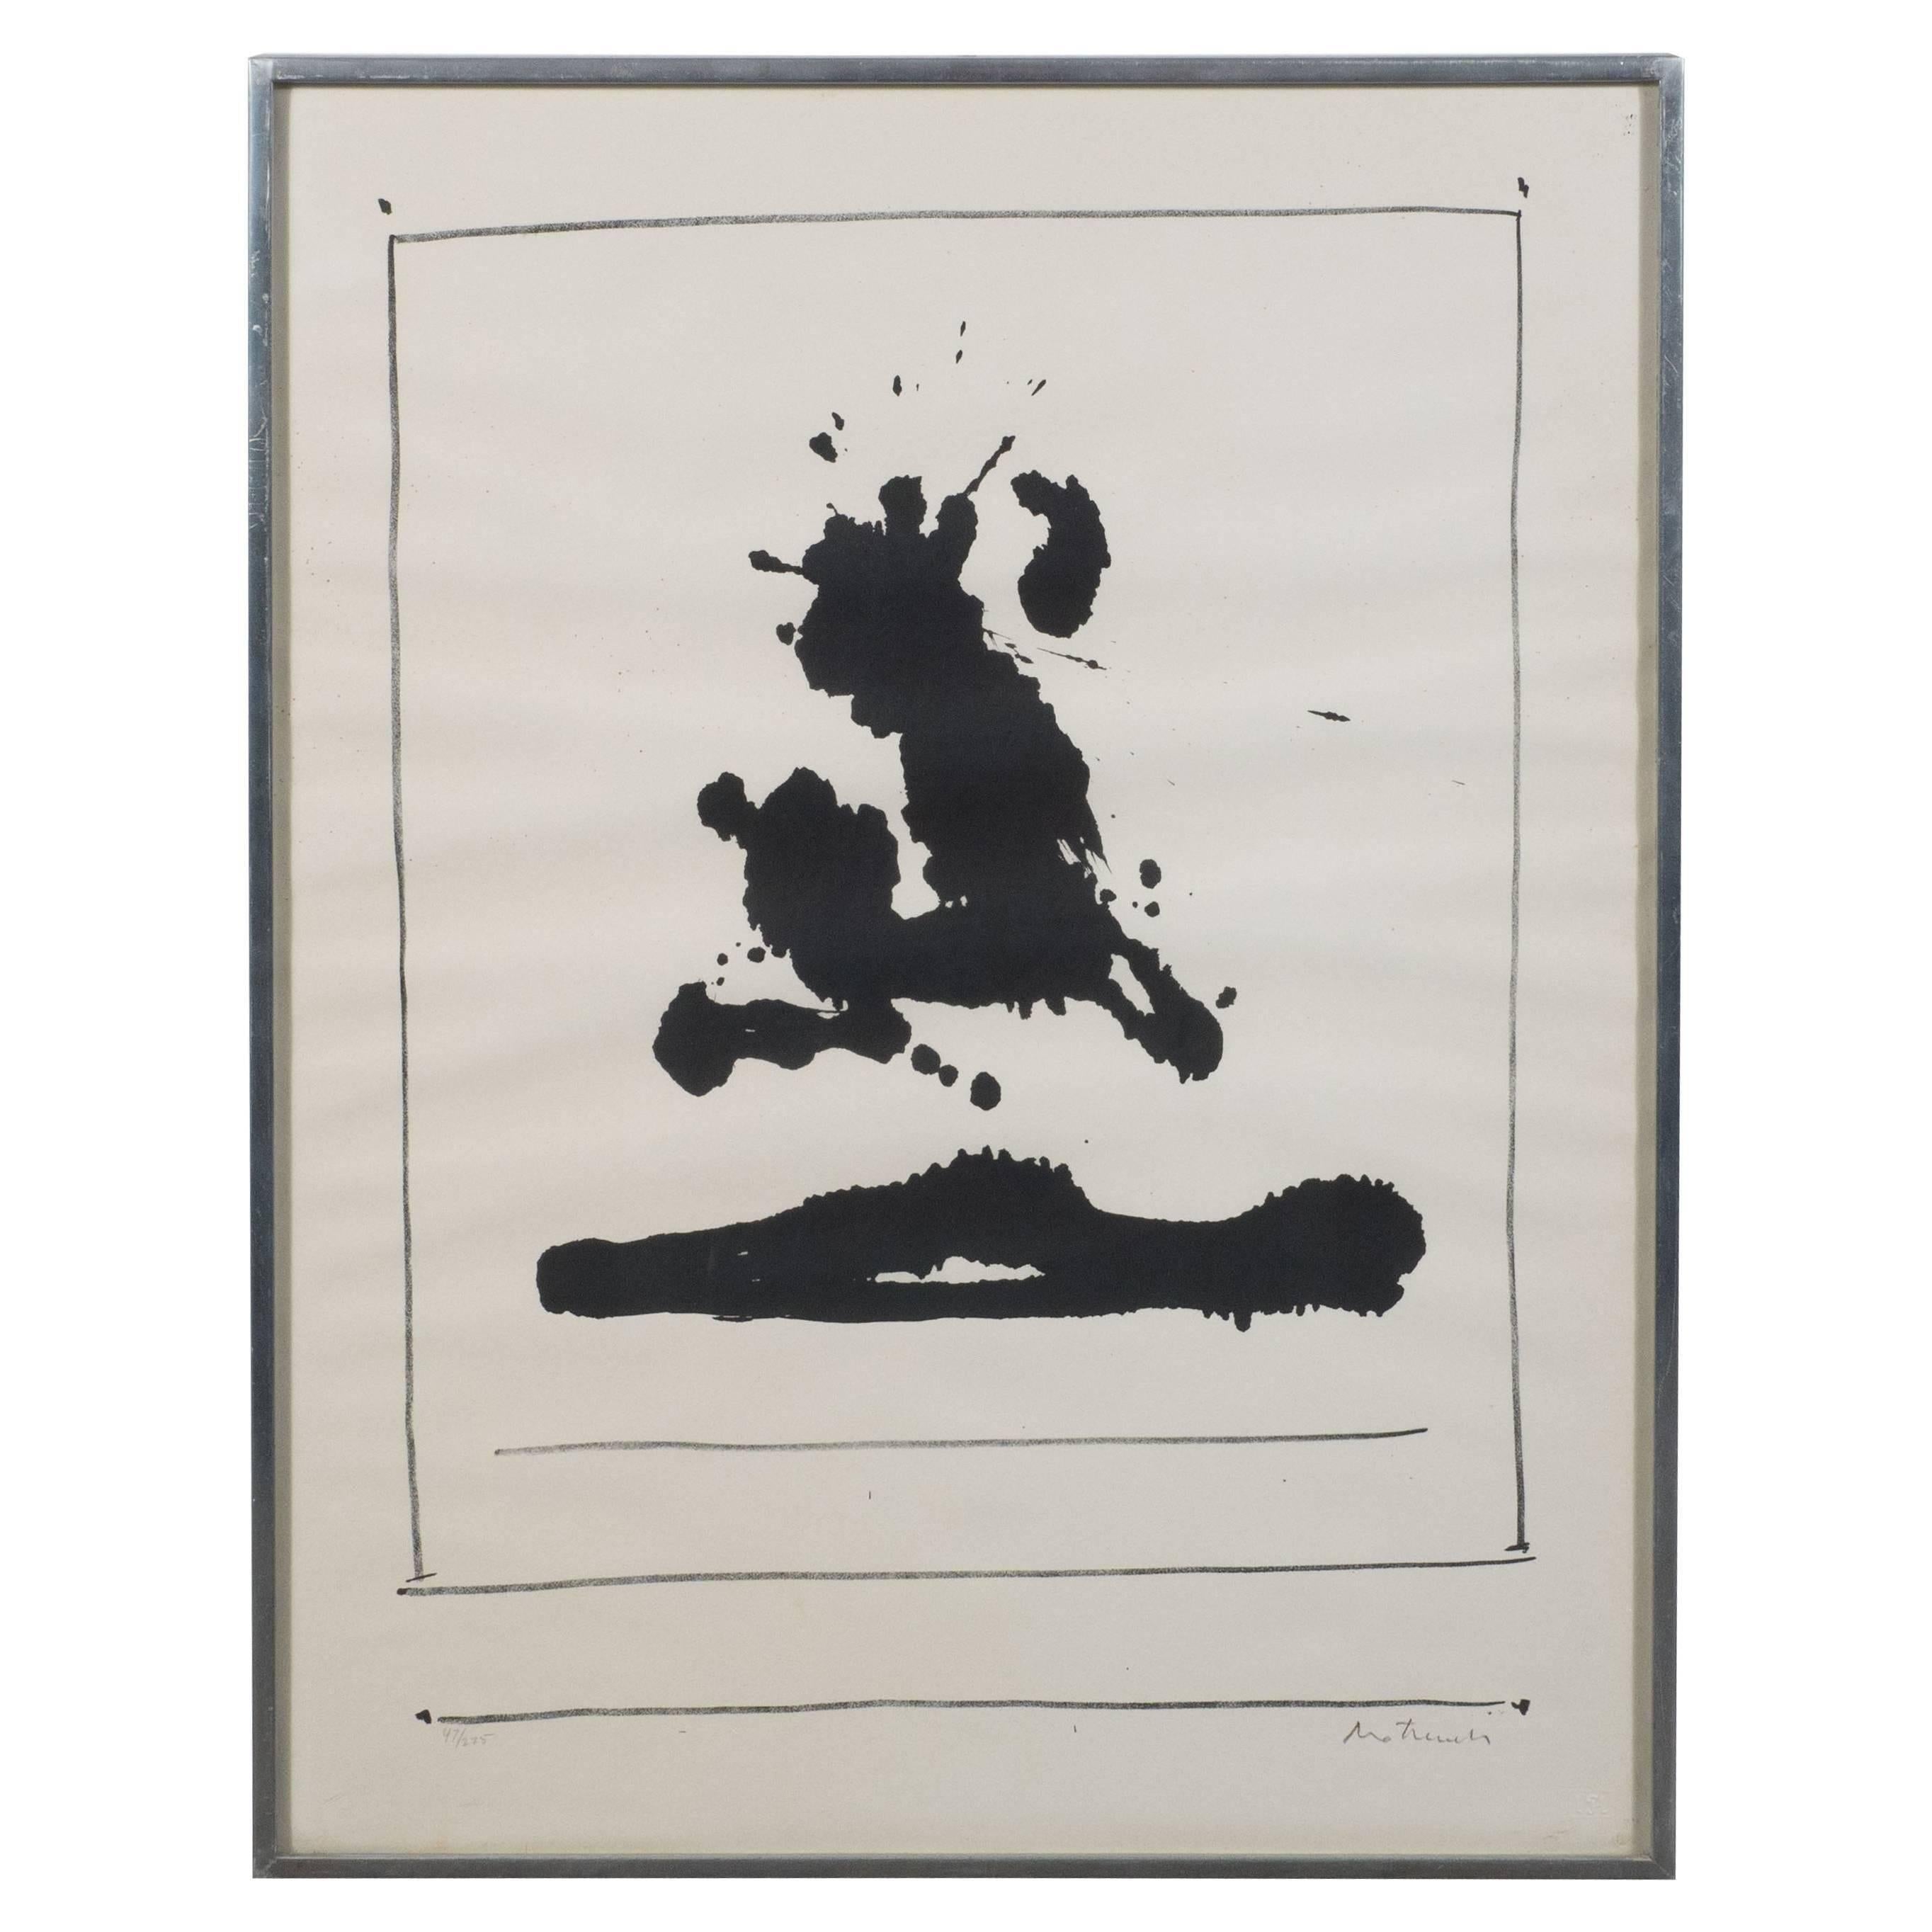 Robert Motherwell Print -  "Untitled", from New York International, Lithograph, 1966